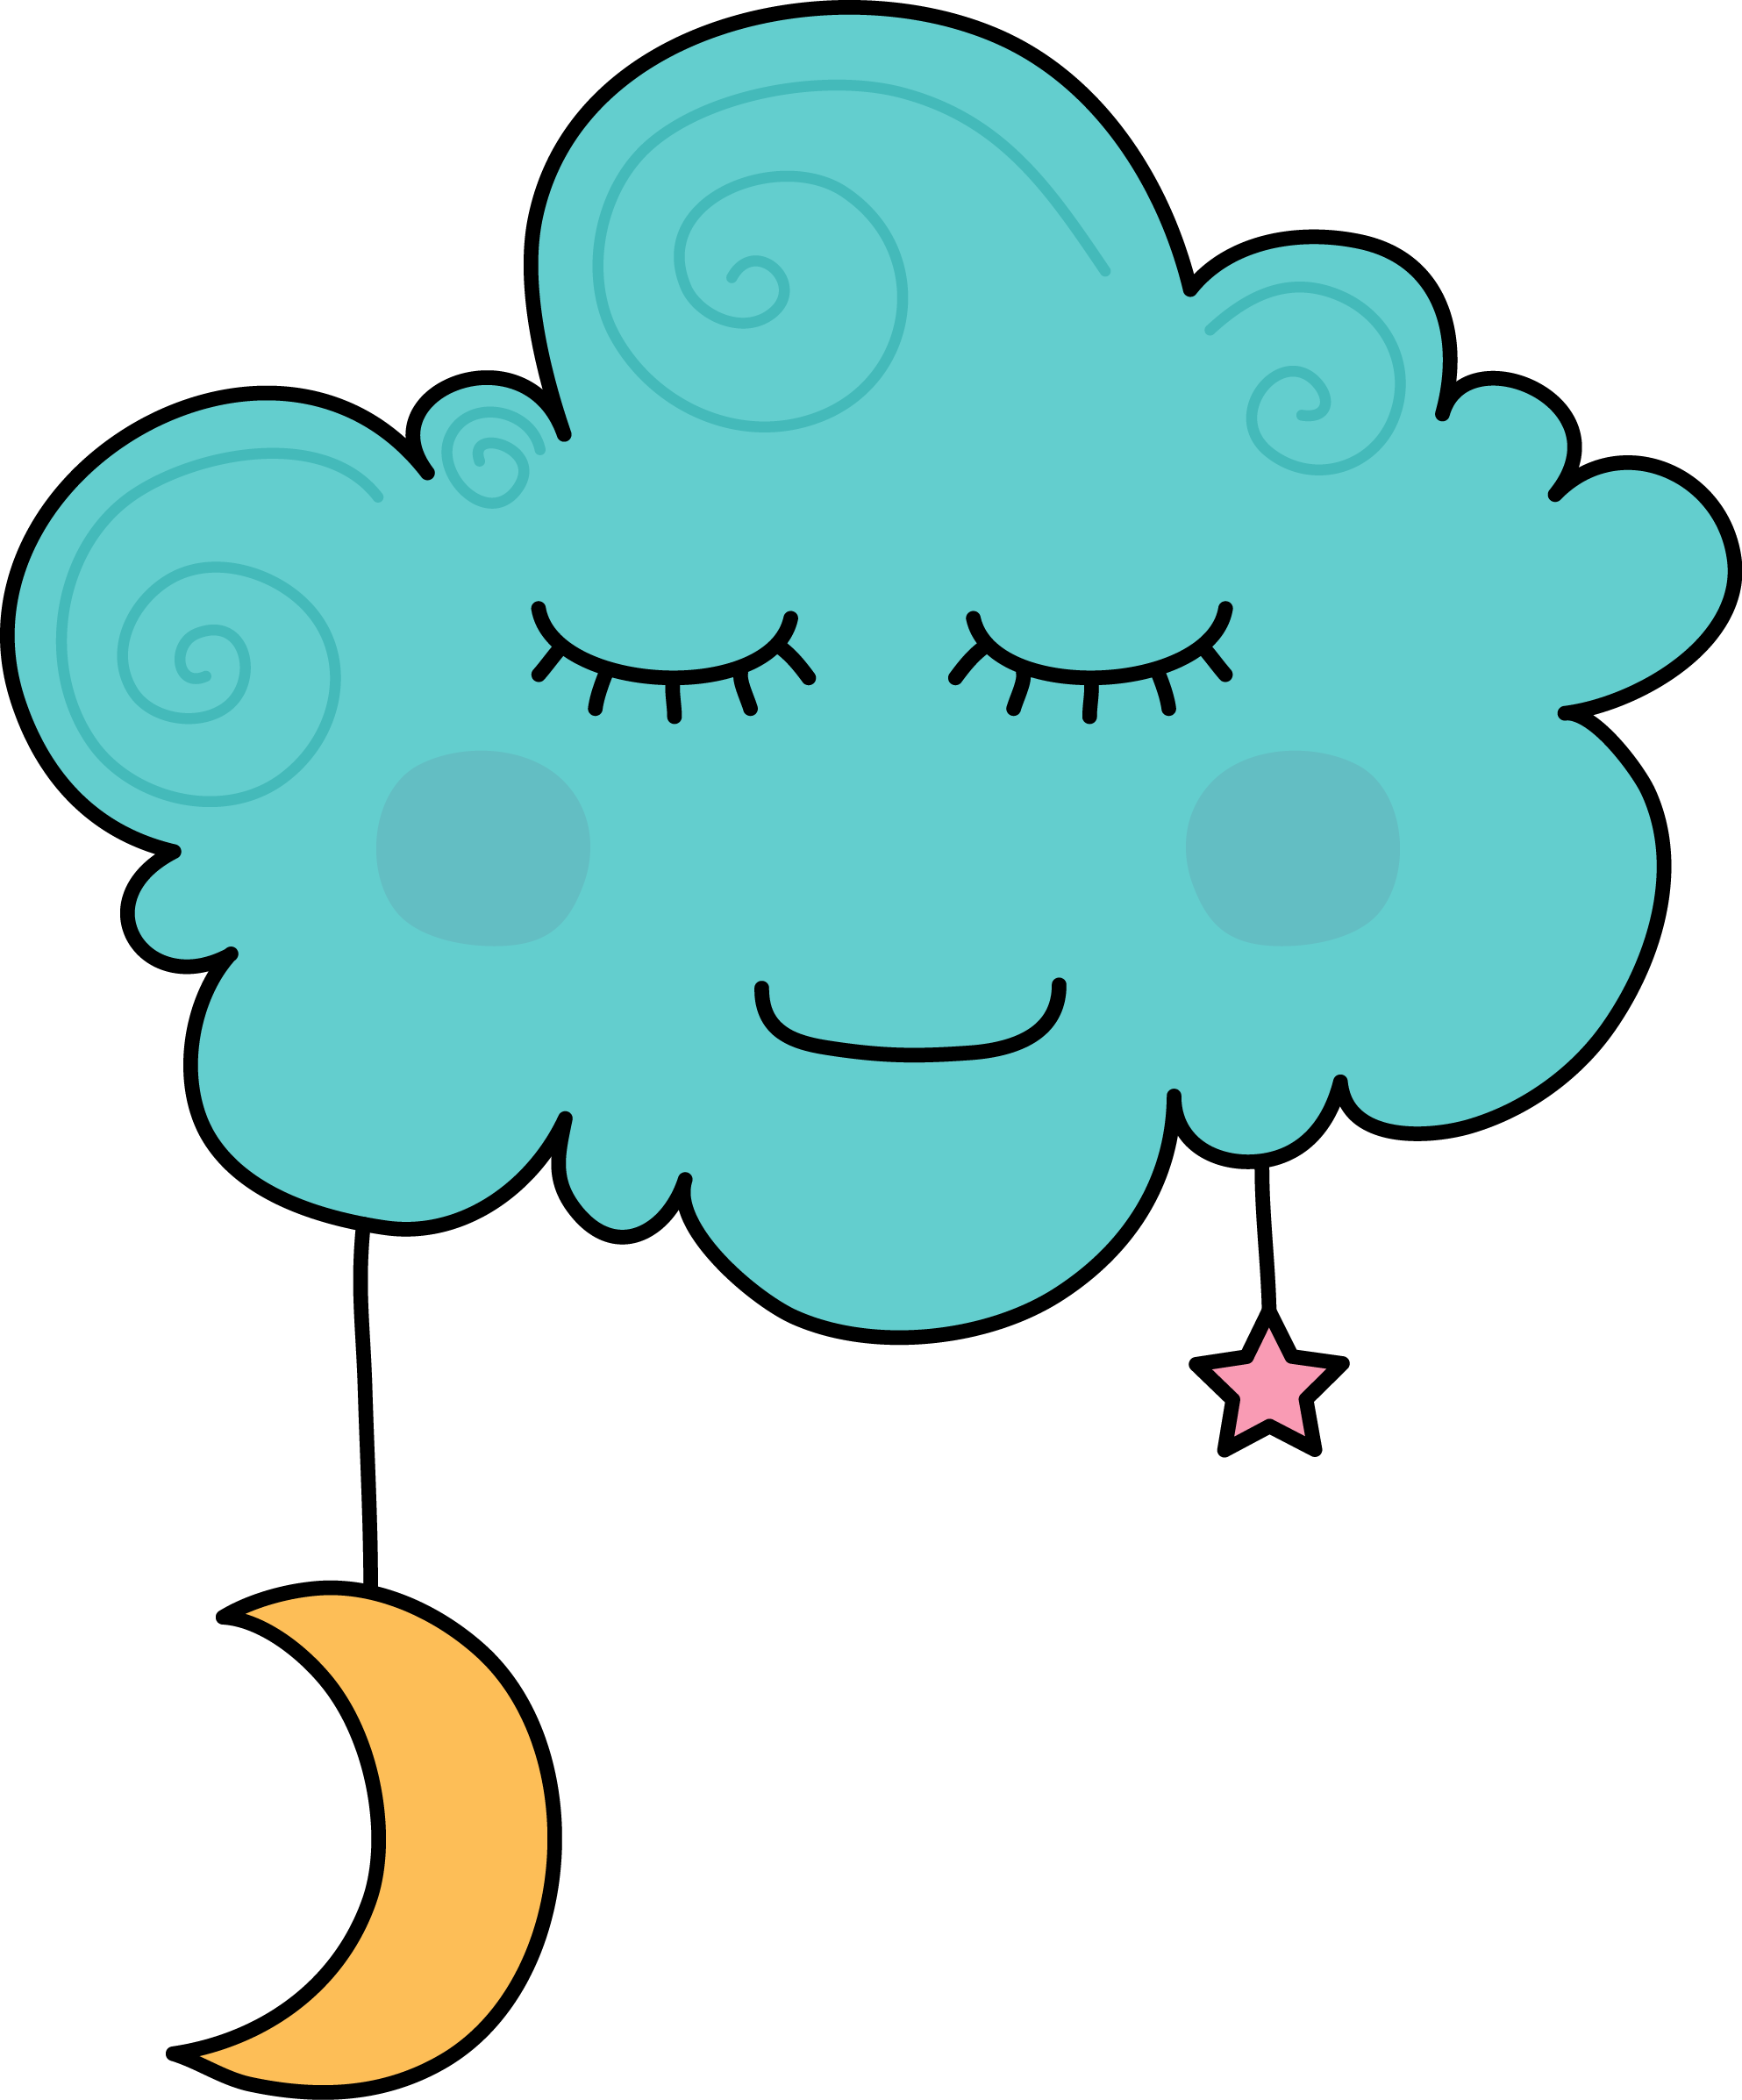 Sleeping cloud 